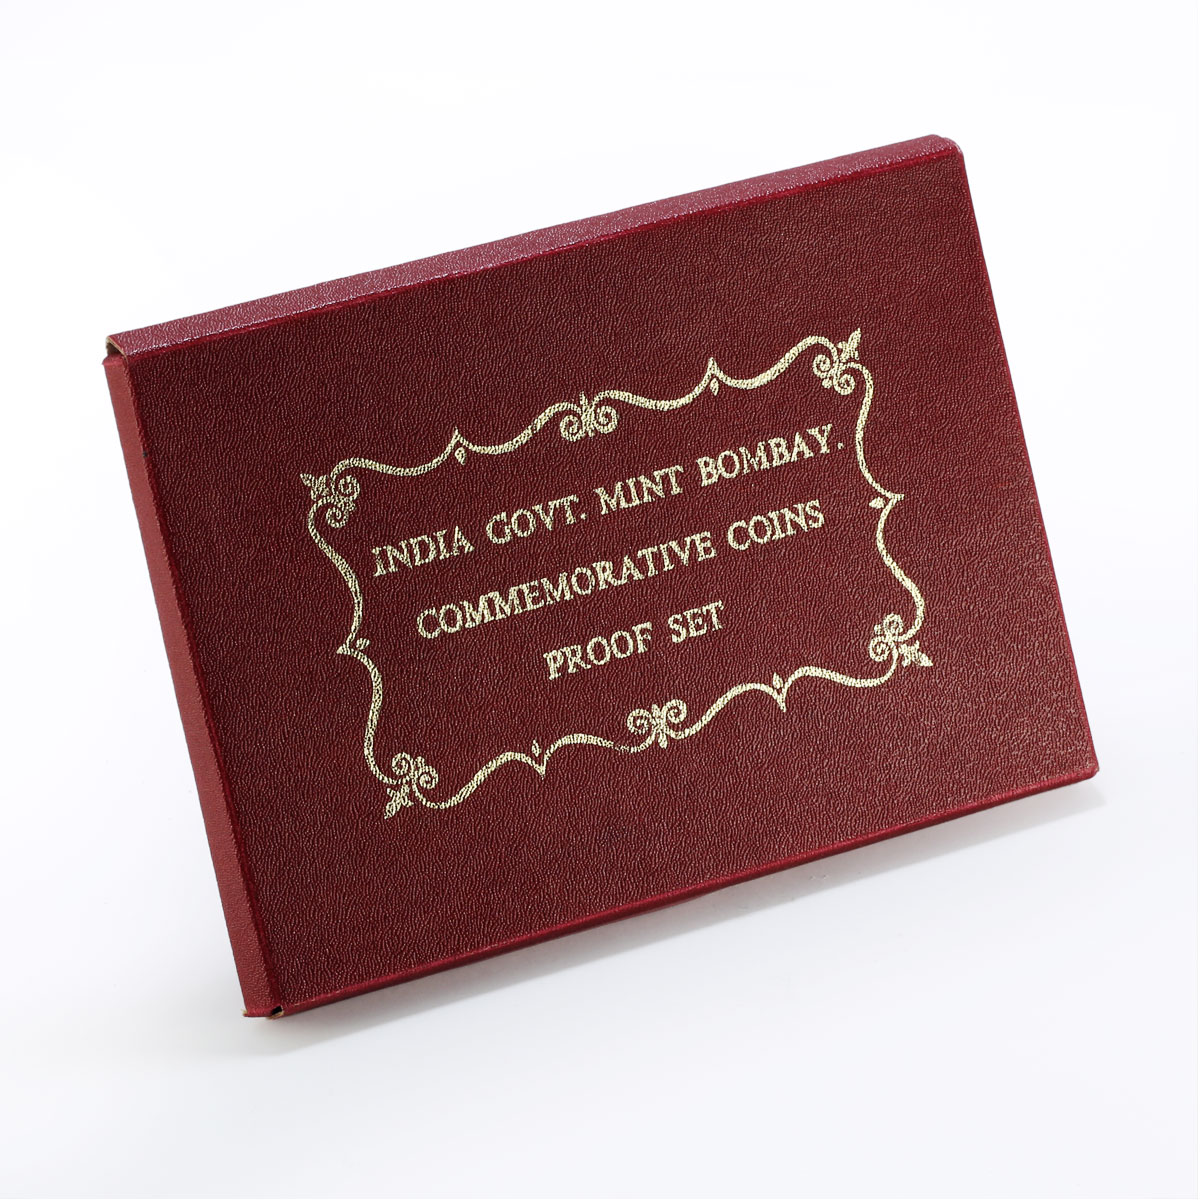 India set of 4 Indira Gandhi Anniversary Politics proof silver coins 1985